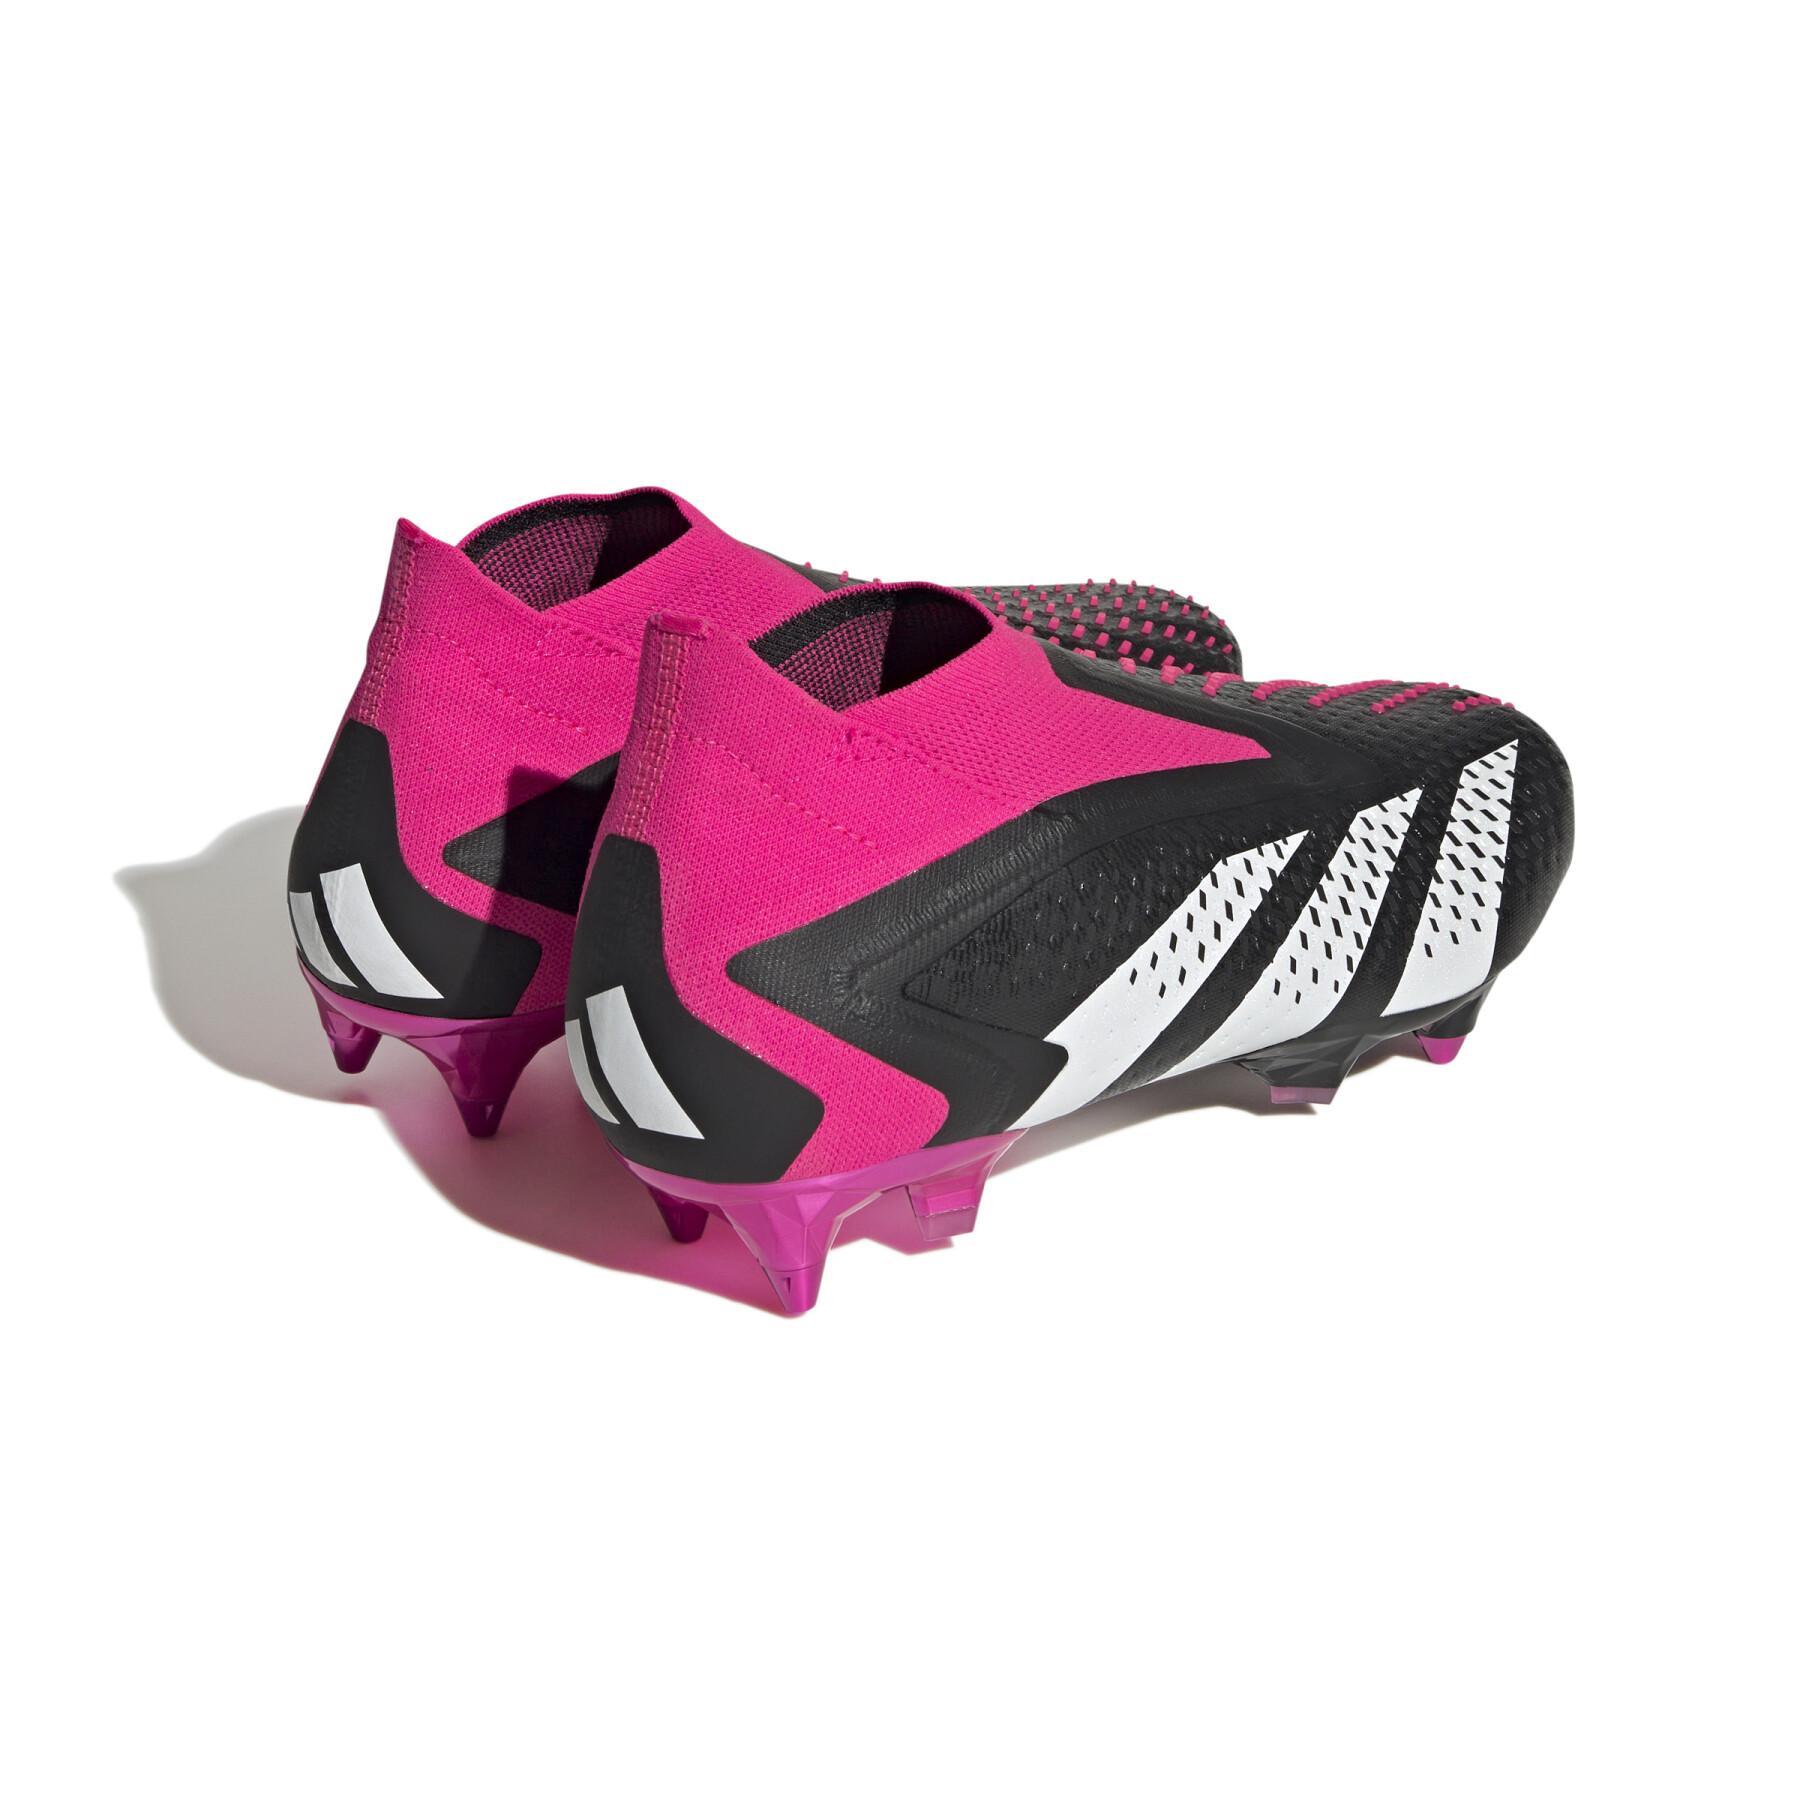 Soccer shoes adidas Predator Accuracy+ SG - Own your Football